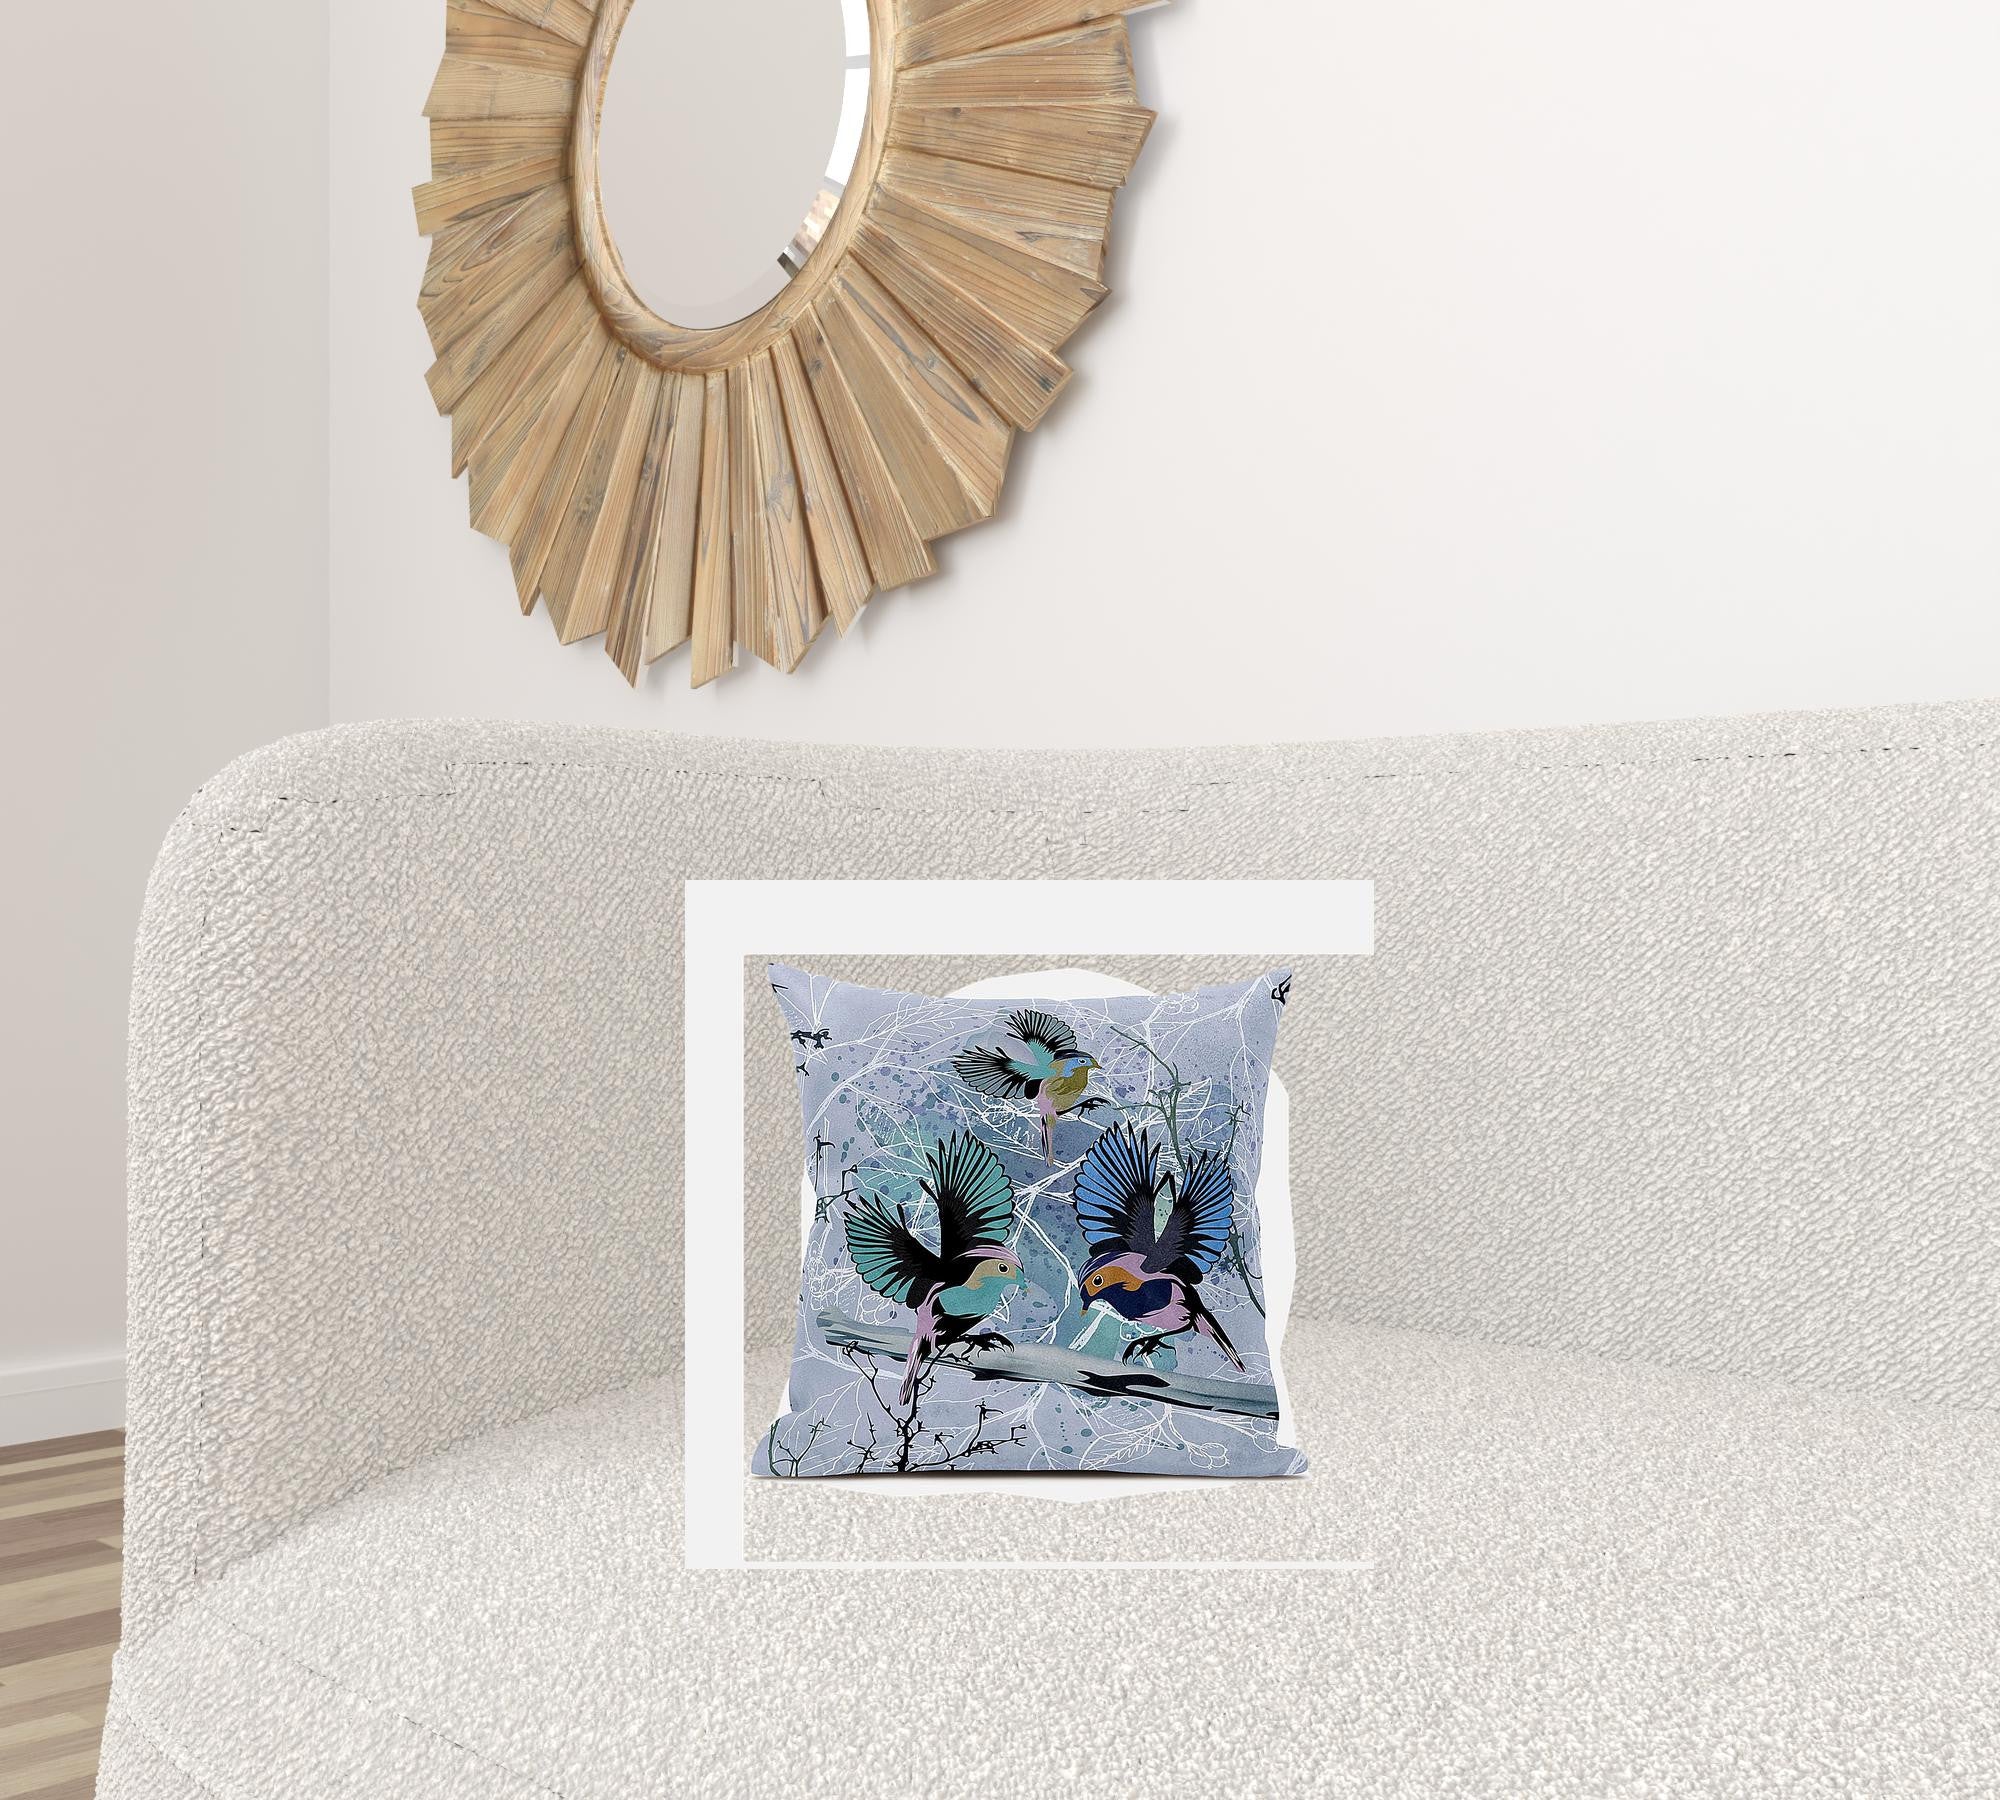 18x18 Blue Pink Gray Bird Blown Seam Broadcloth Animal Print Throw Pillow